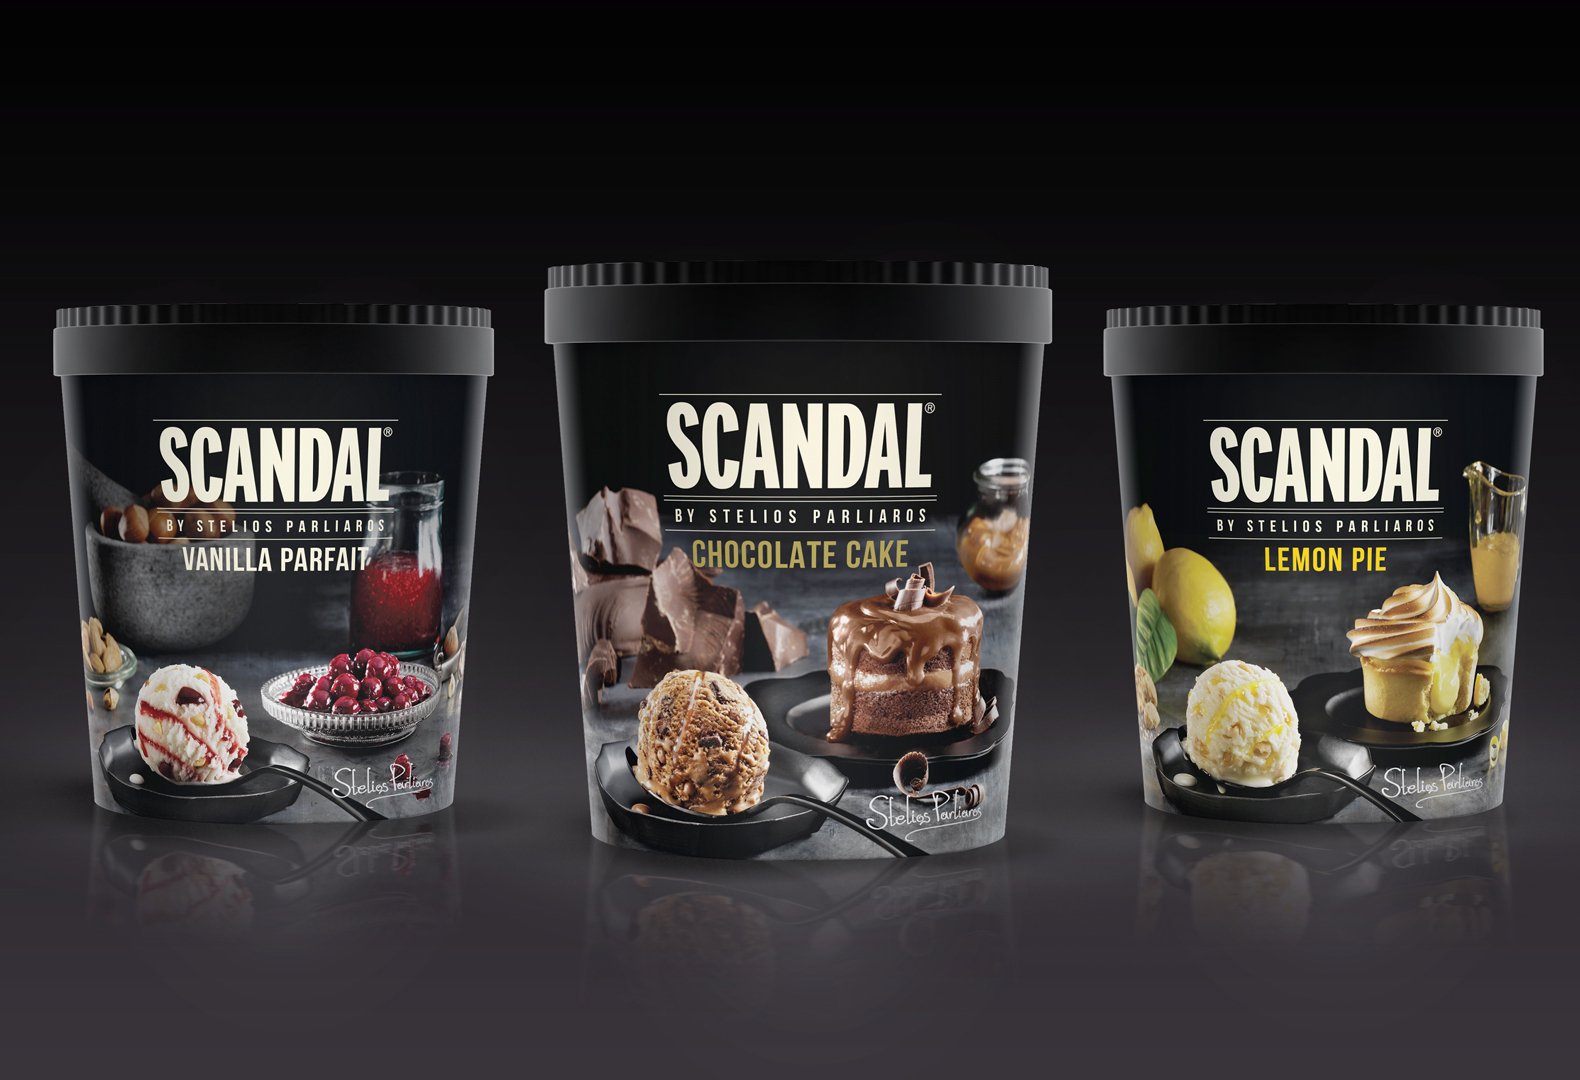 Scandal ice creams by Stelios Parliaros product portfolio